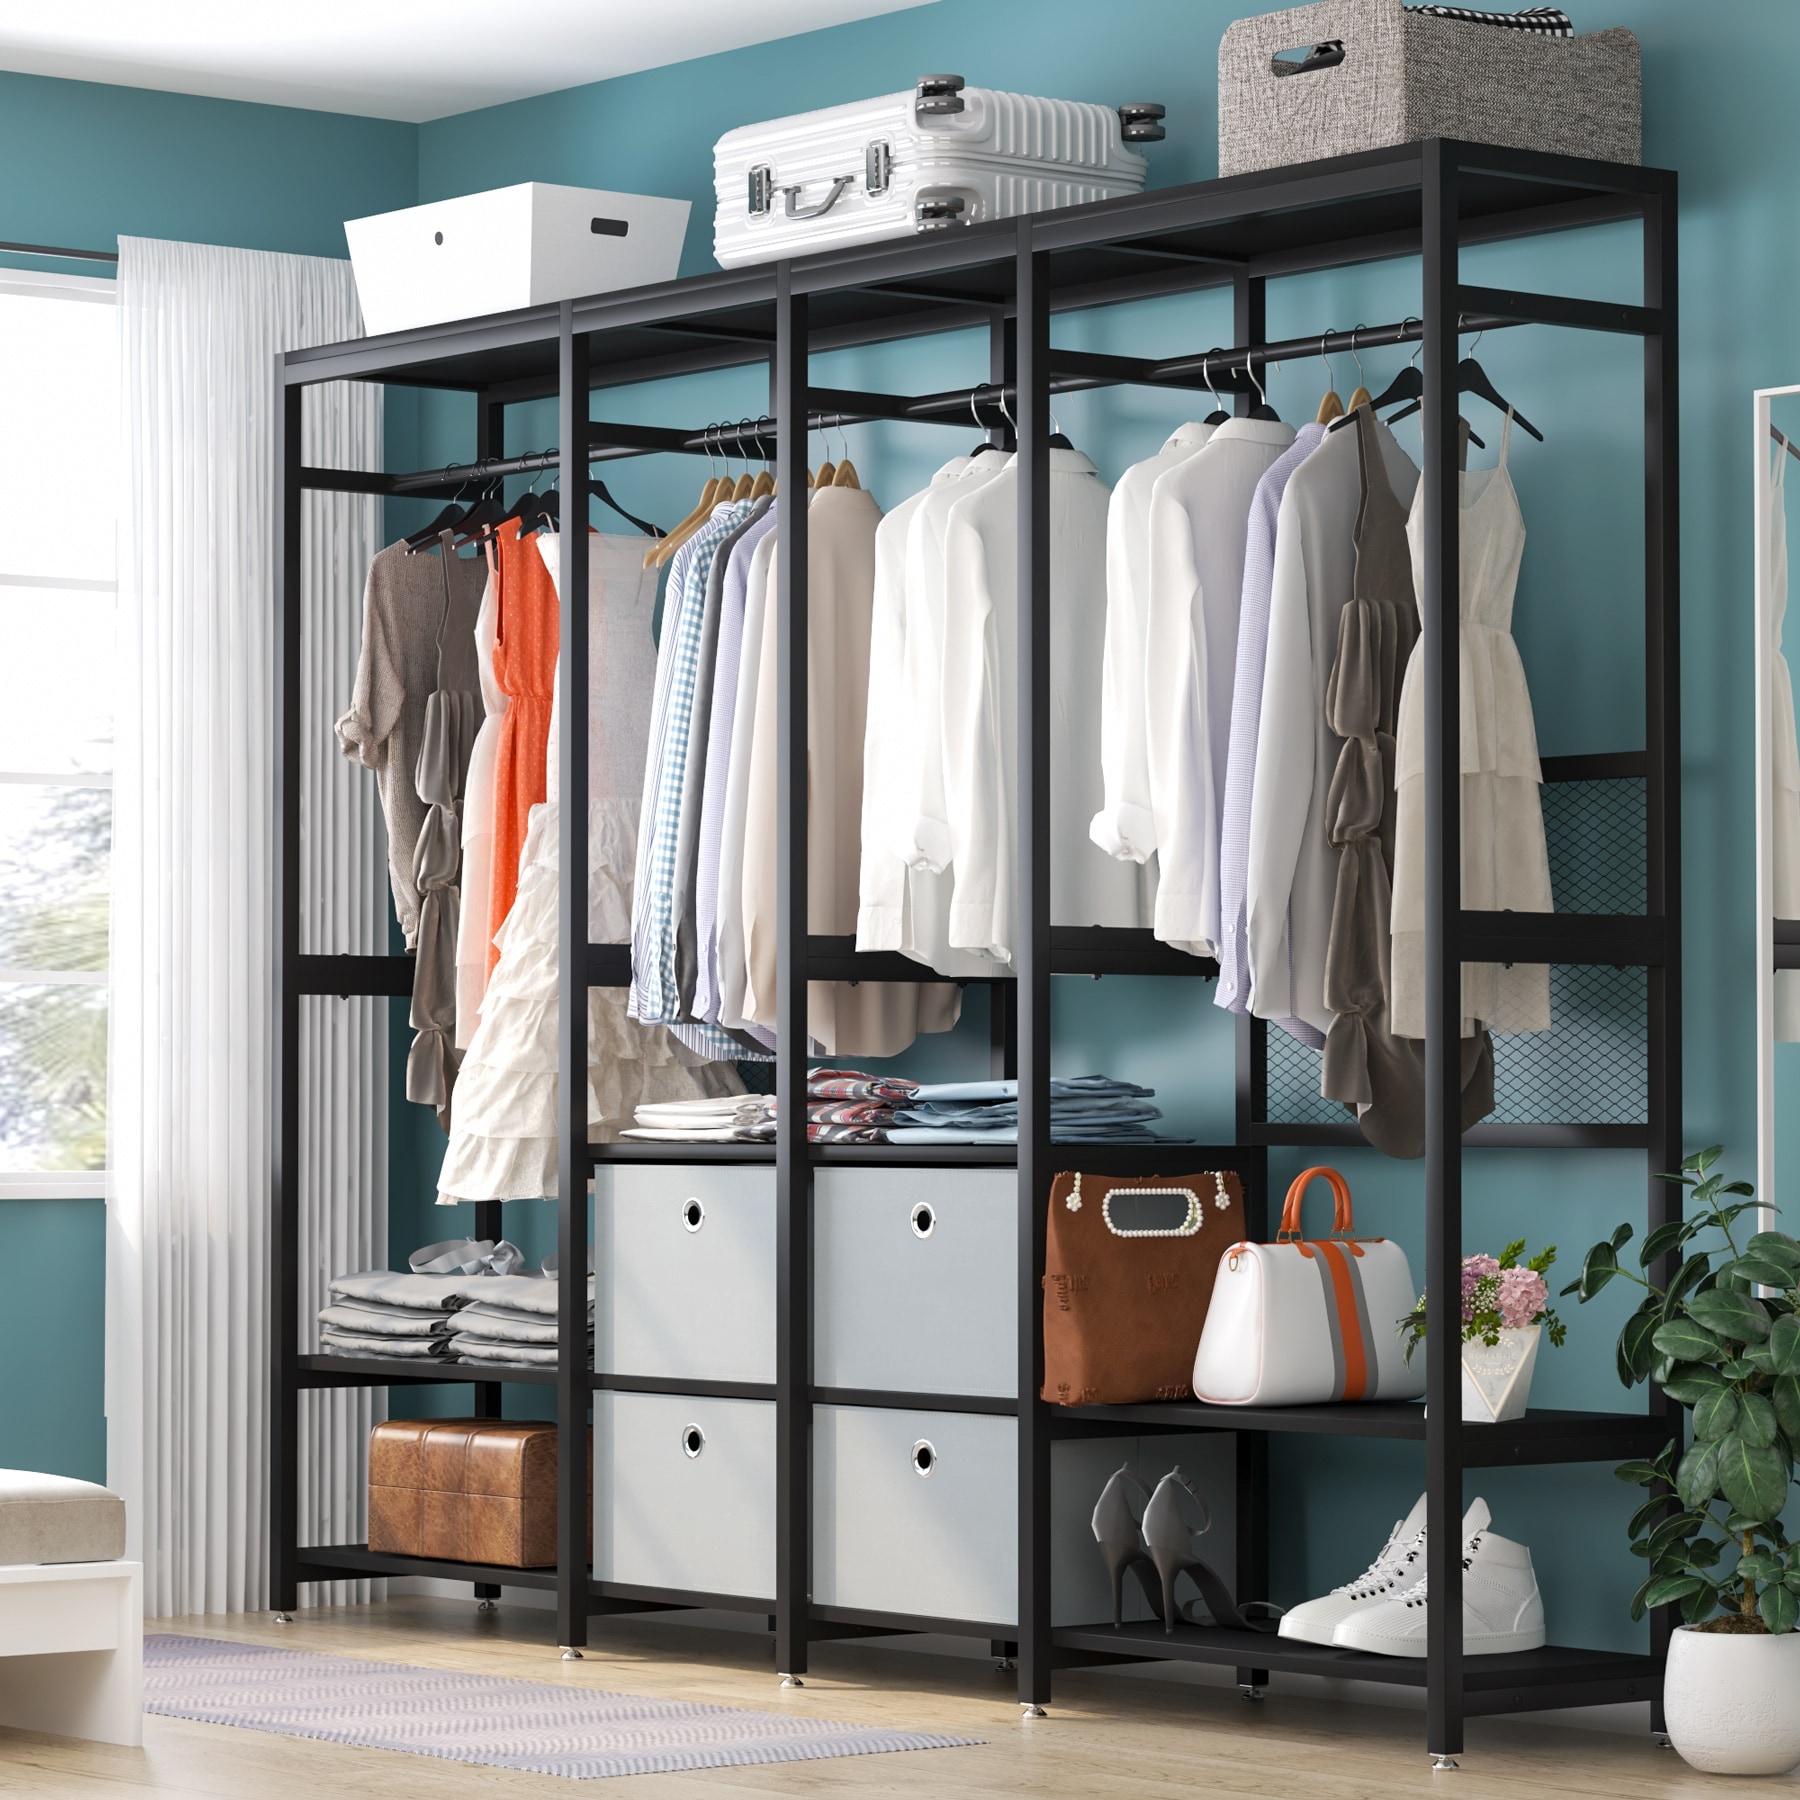 Tribesigns Free-standing Closet Organizer with 6 Storage Shelves